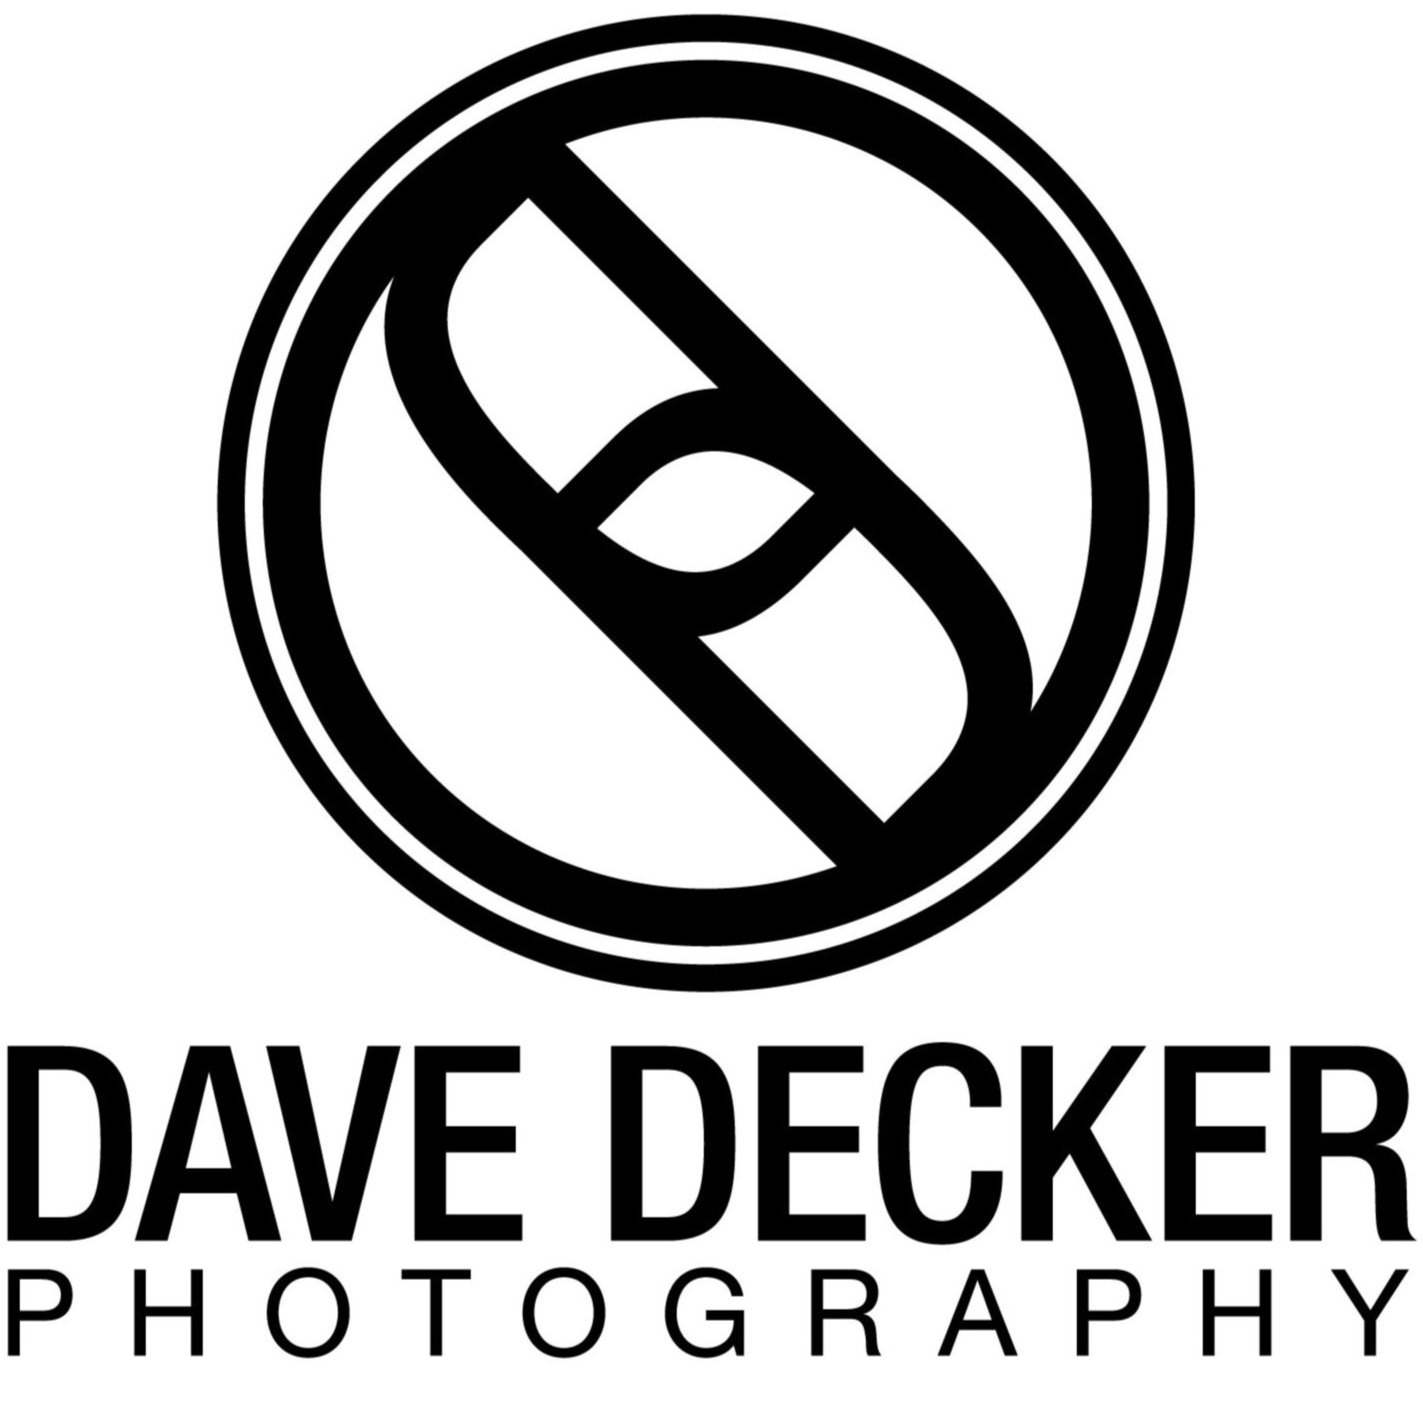 Dave Decker Photography